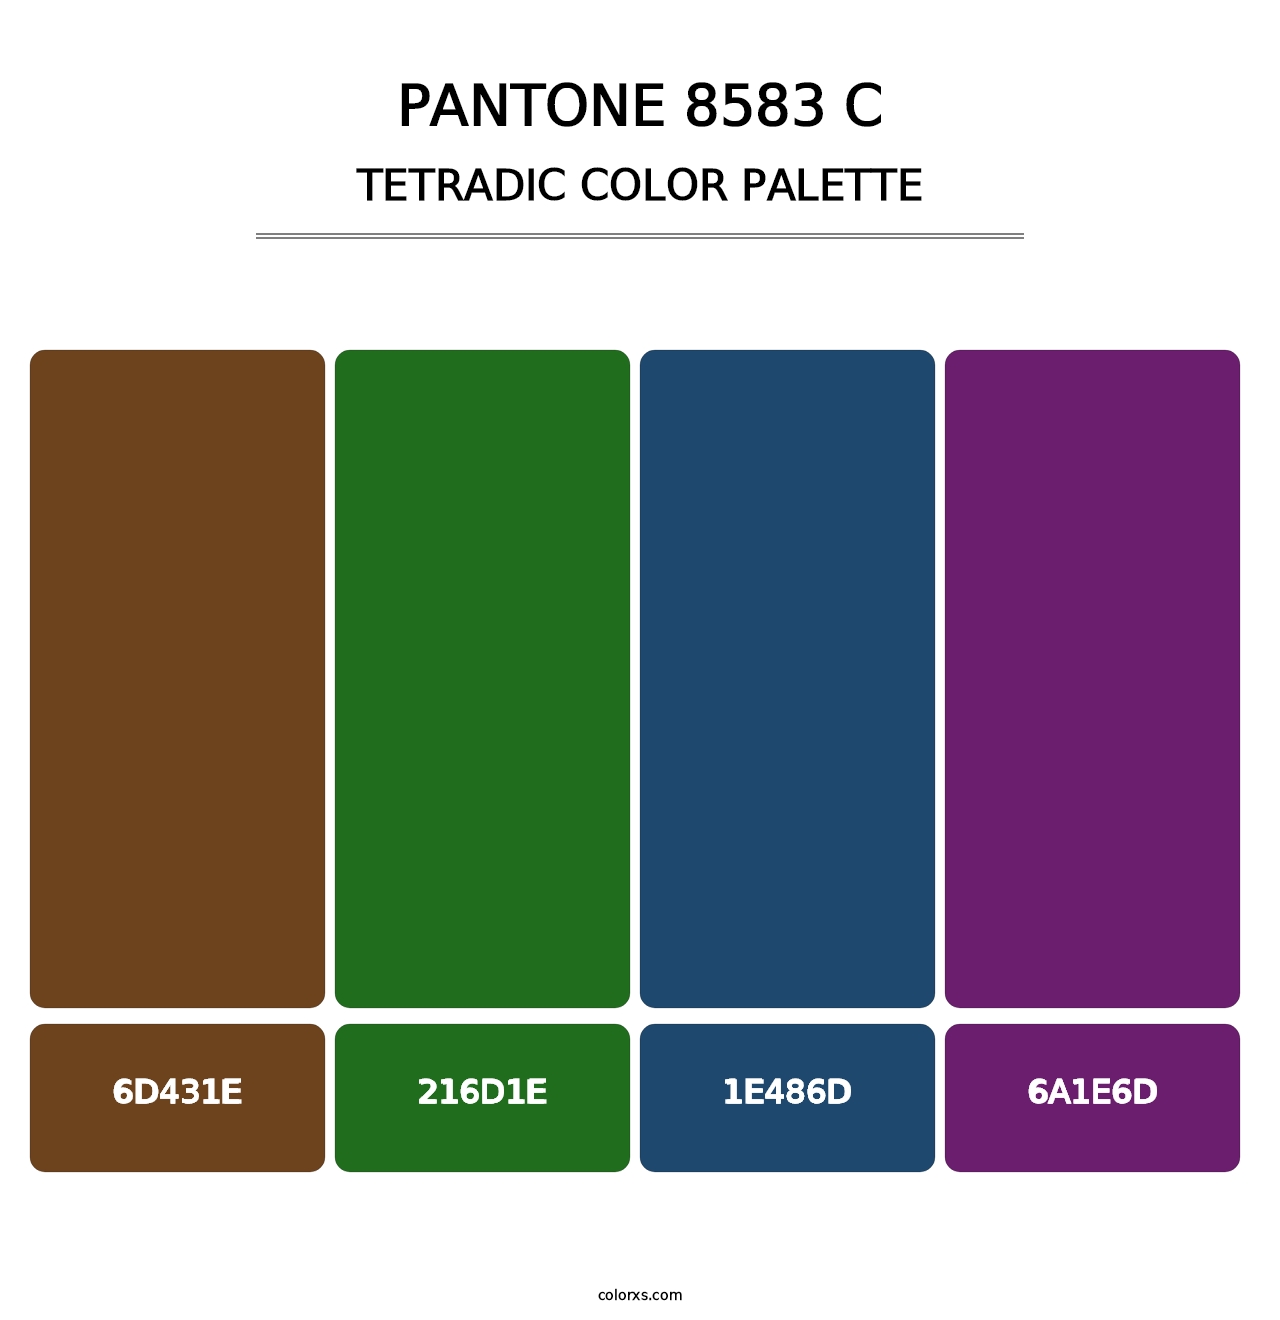 PANTONE 8583 C - Tetradic Color Palette